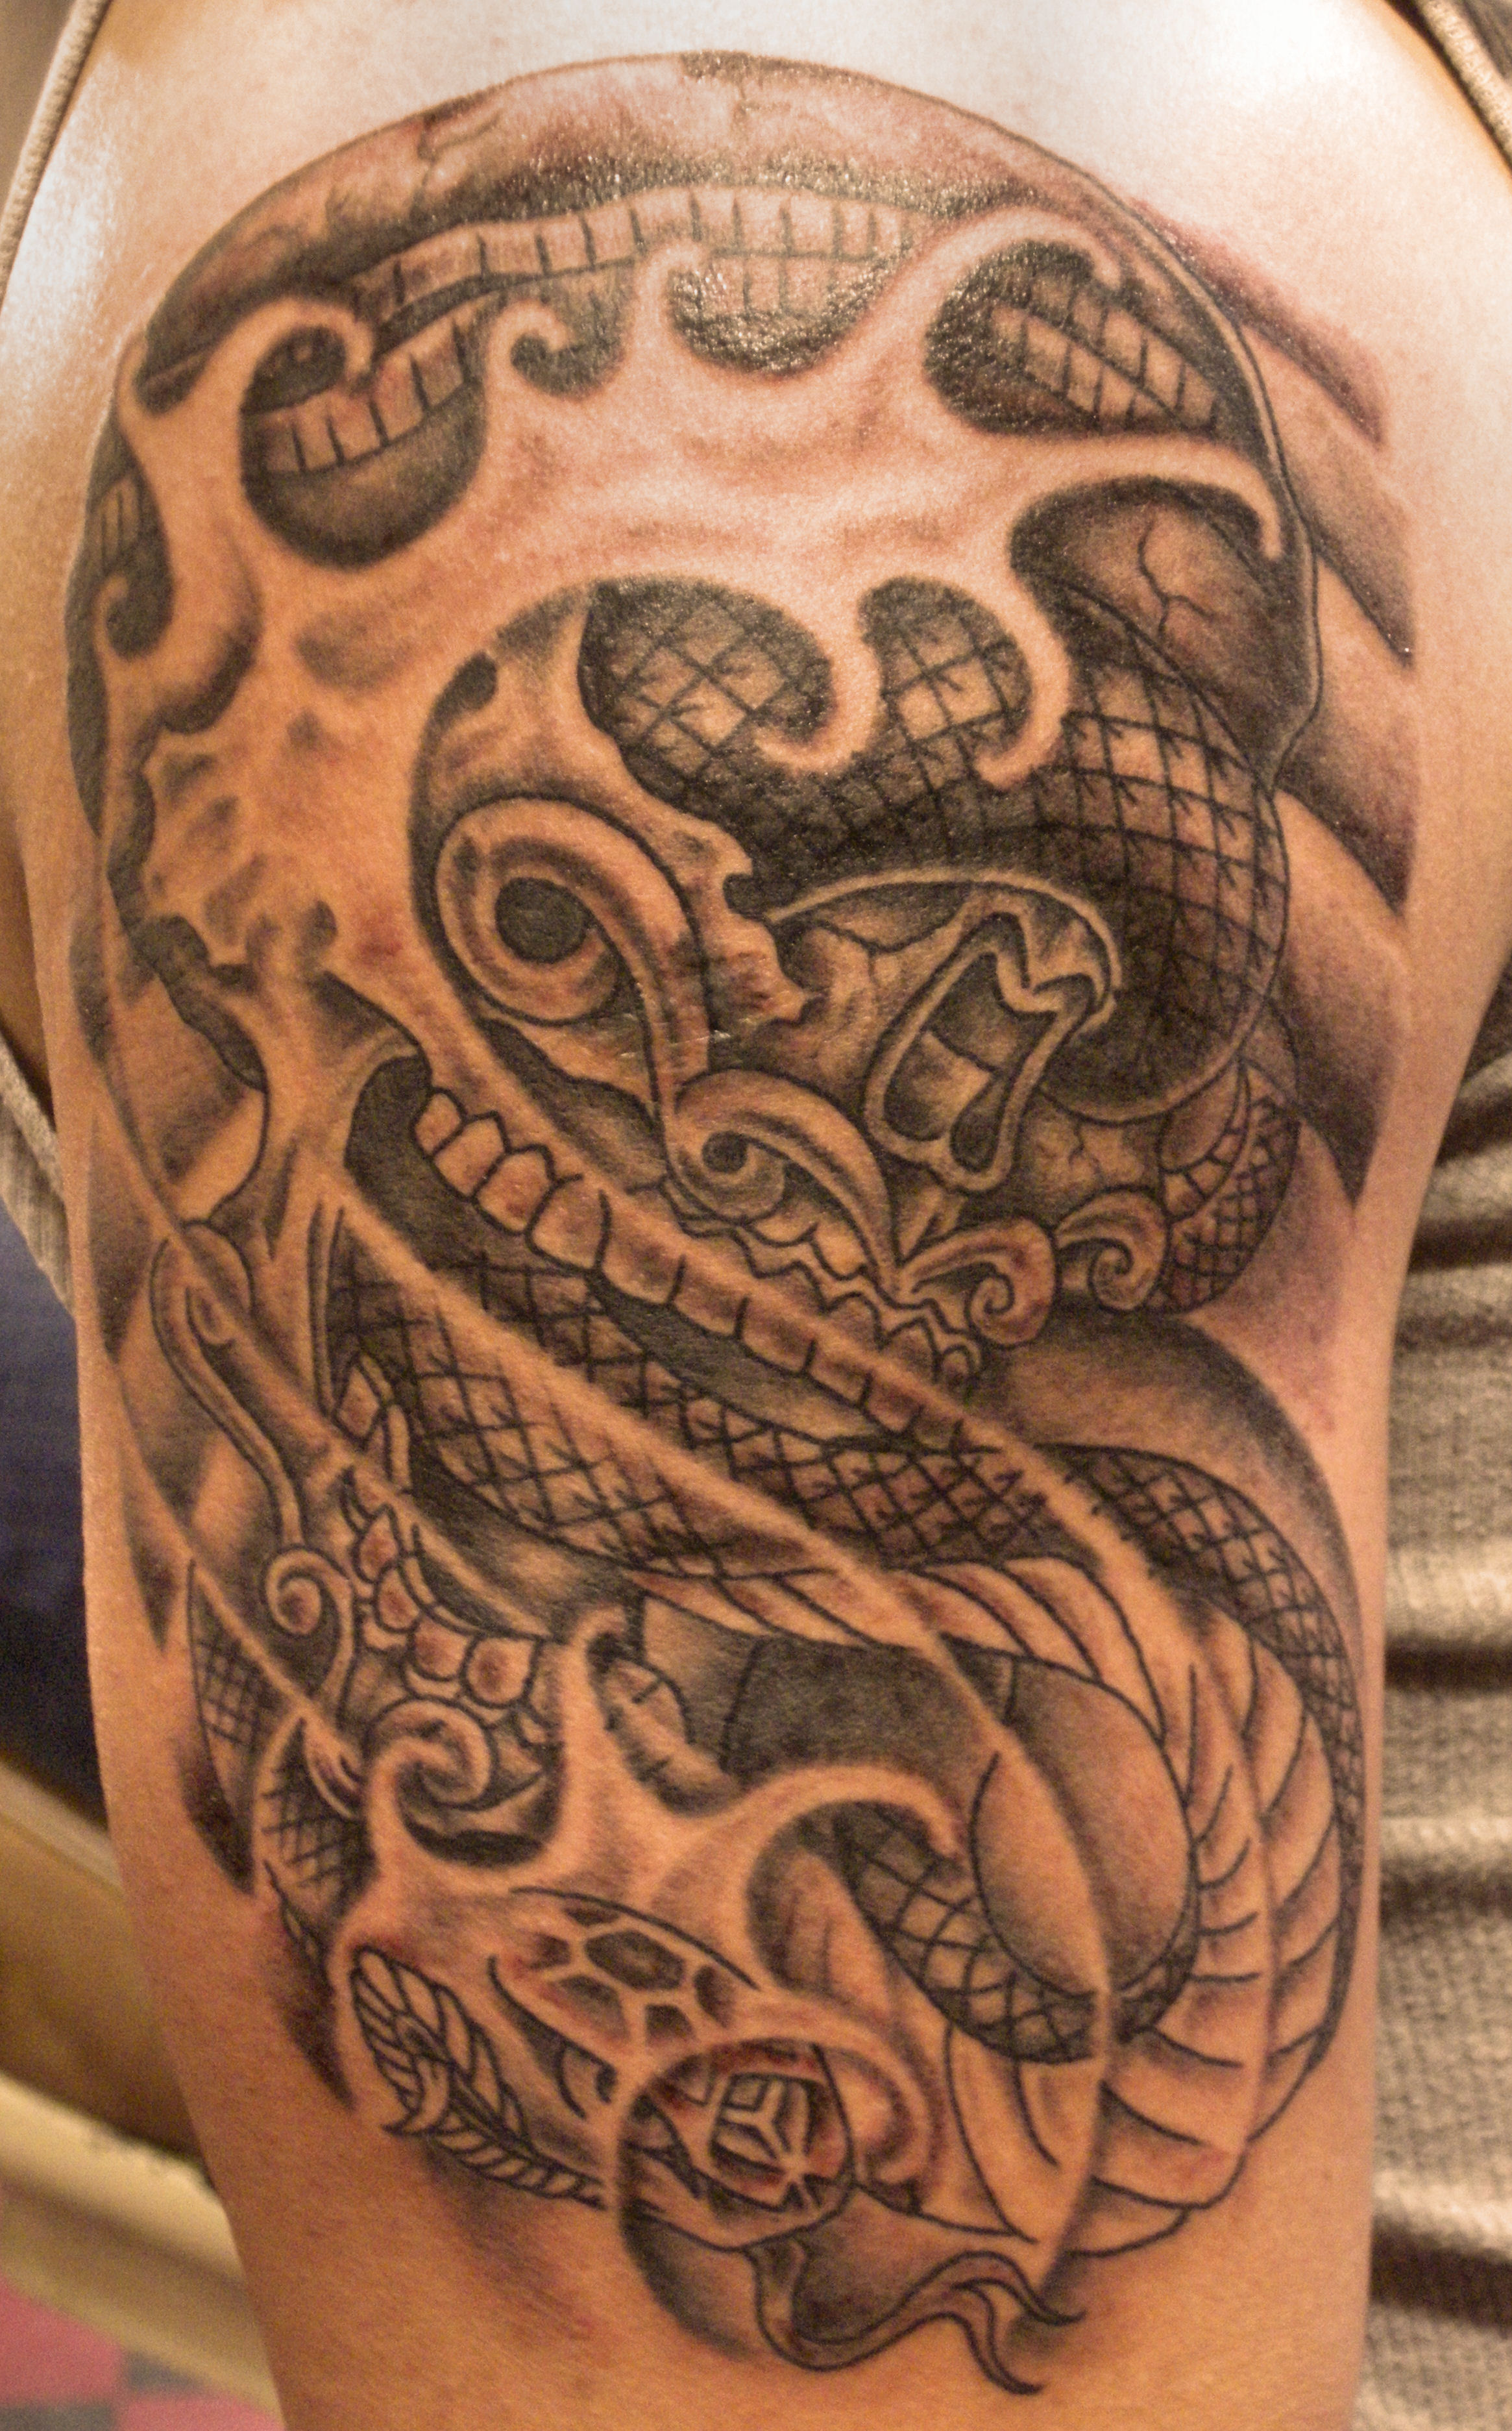 50 Amazing Tattoo Designs for Men - Yo Tattoo